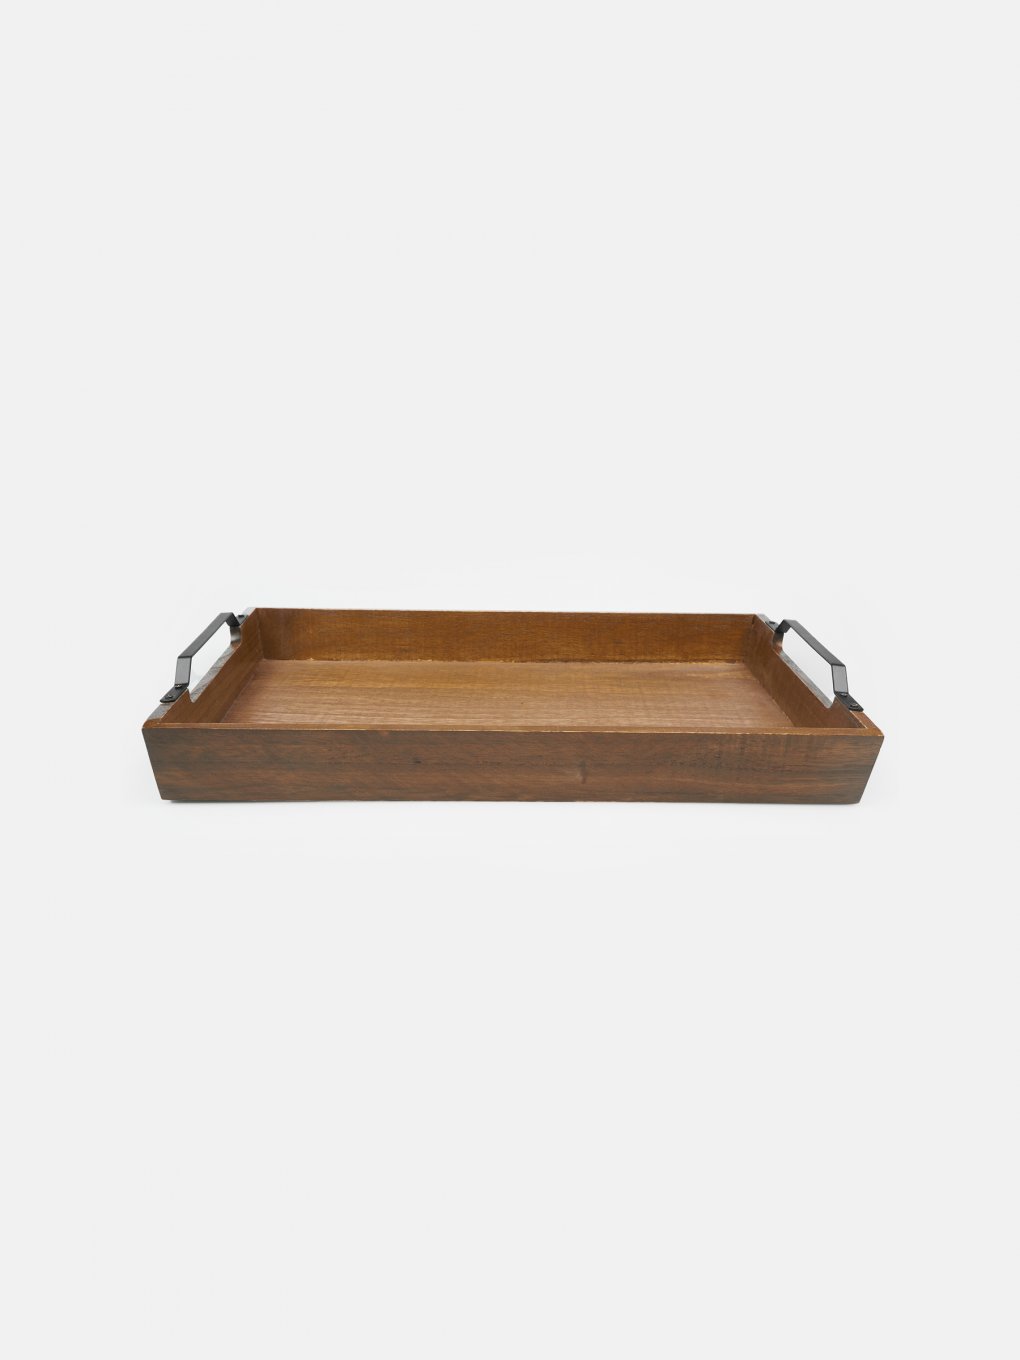 Wooden decorative tray